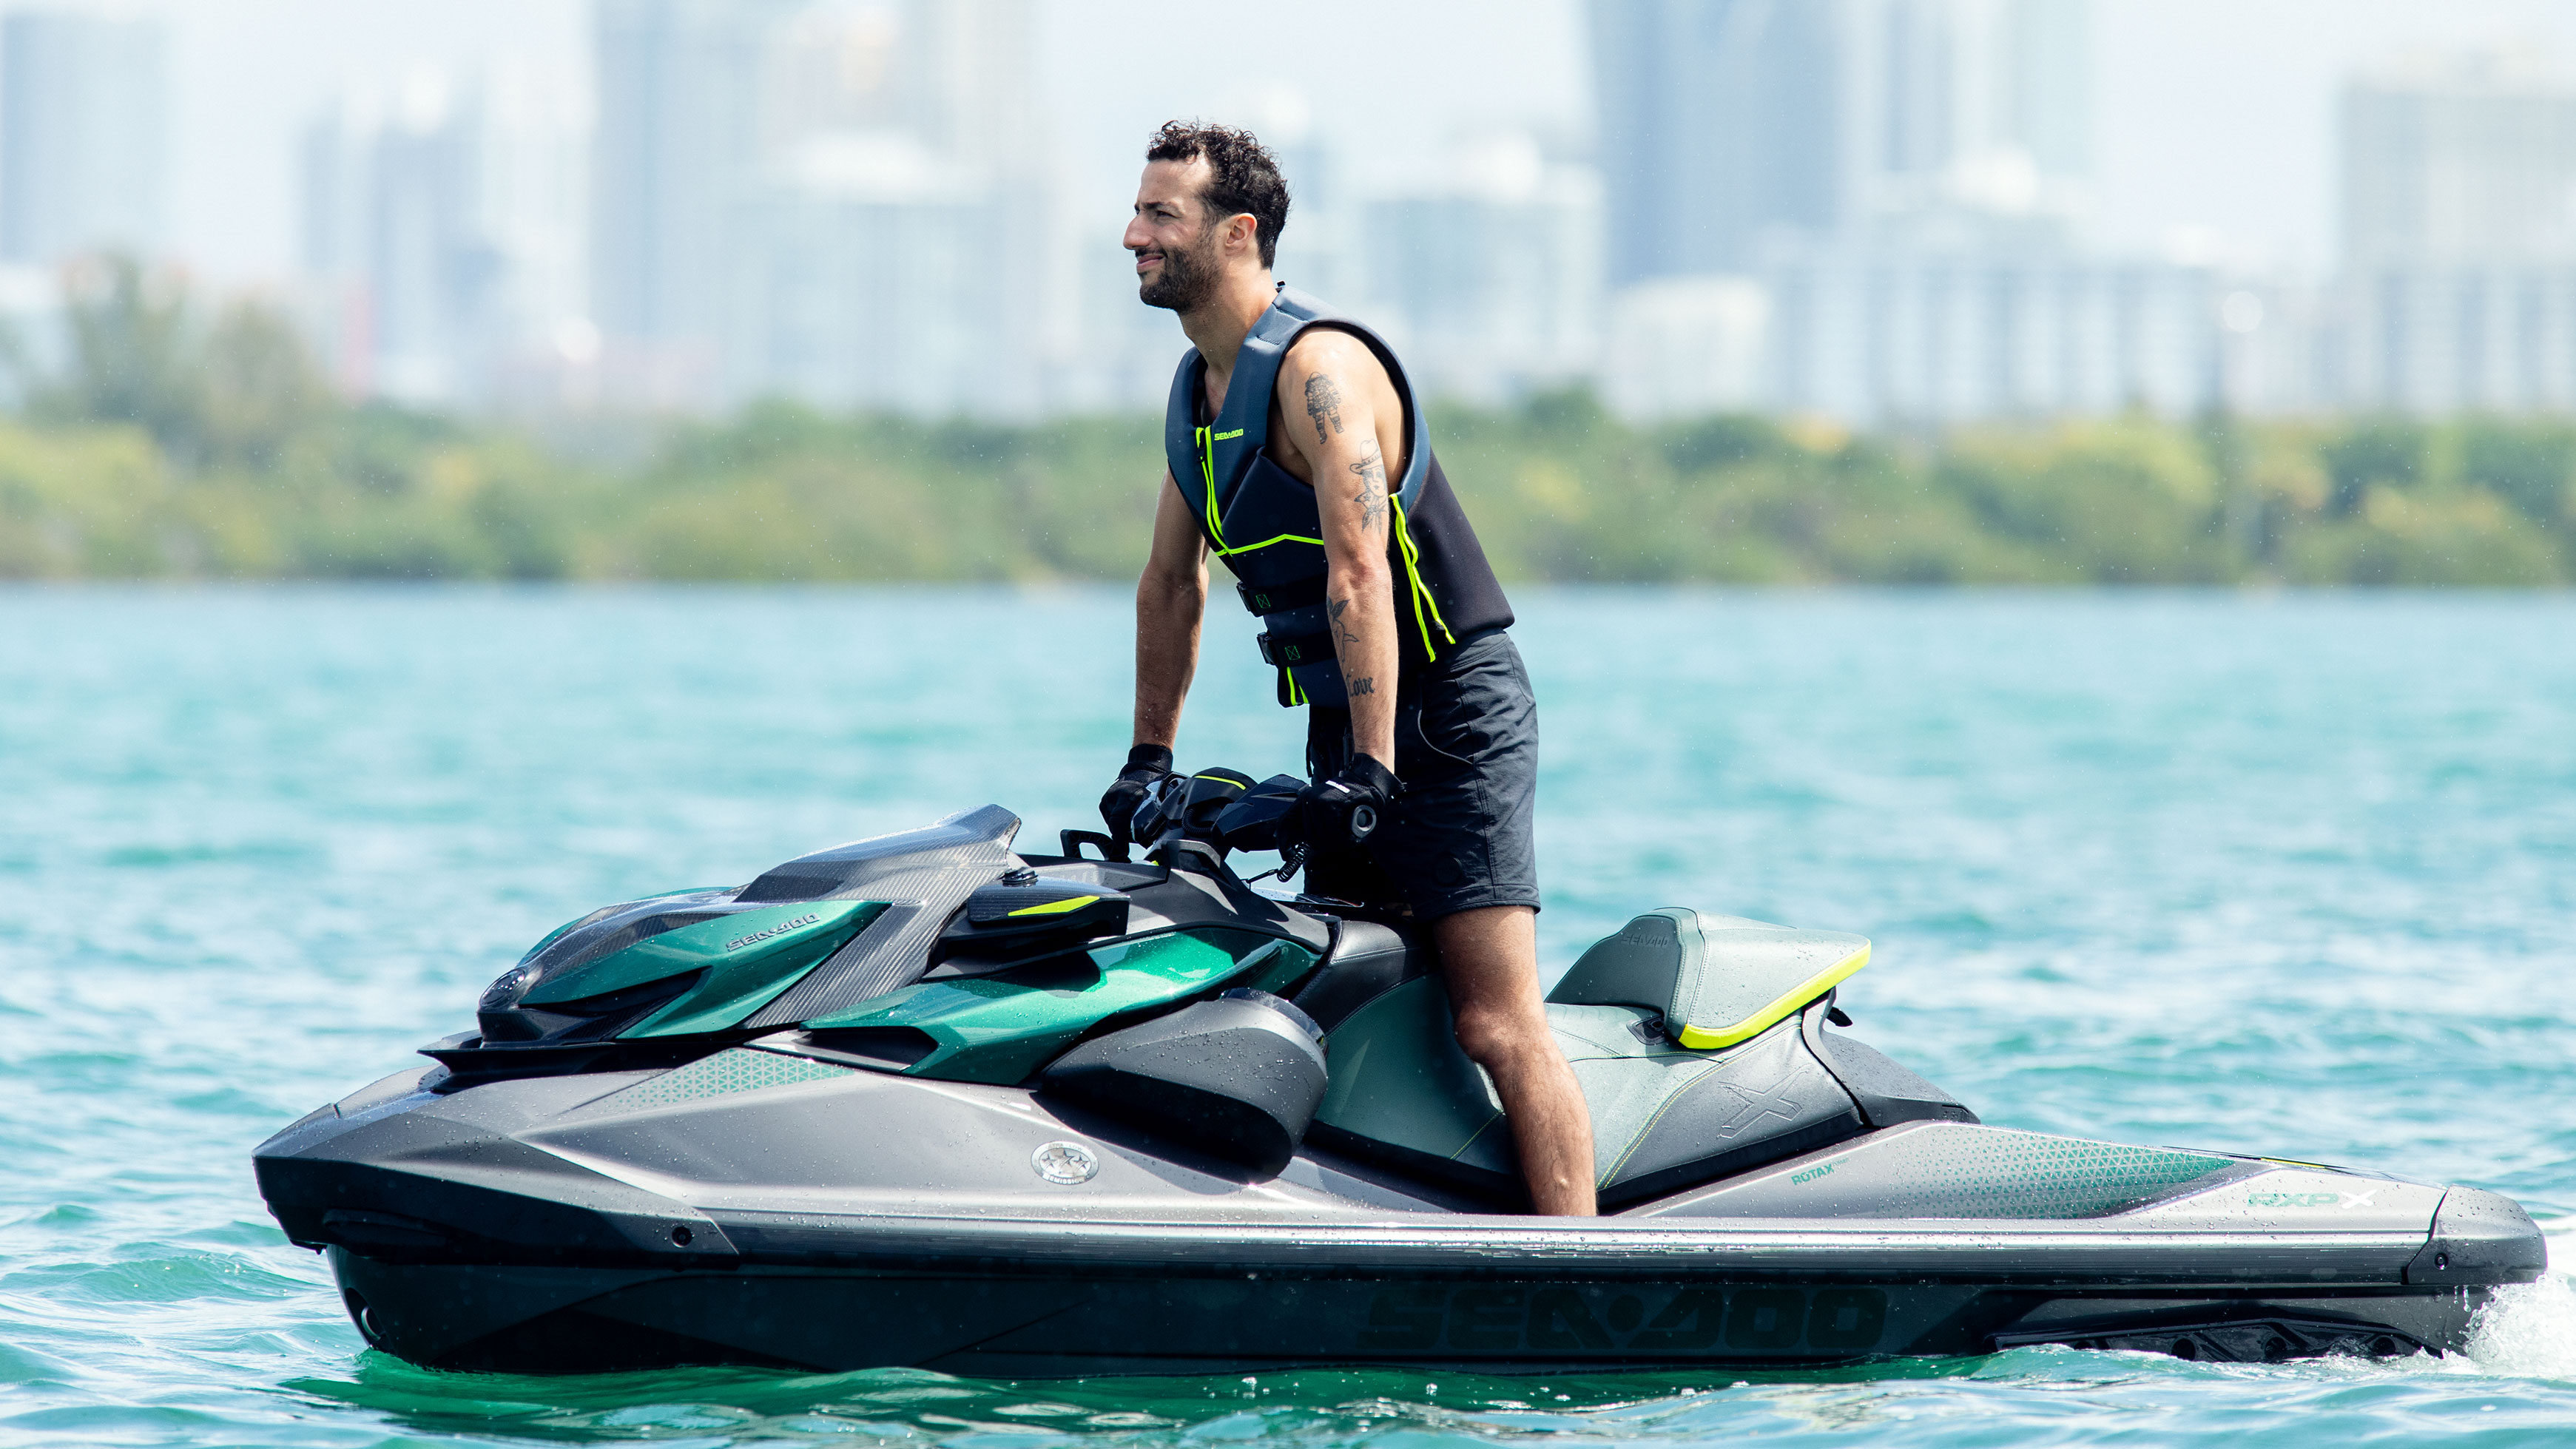 Daniel Ricciardo on the new high-performance Sea-Doo on the water